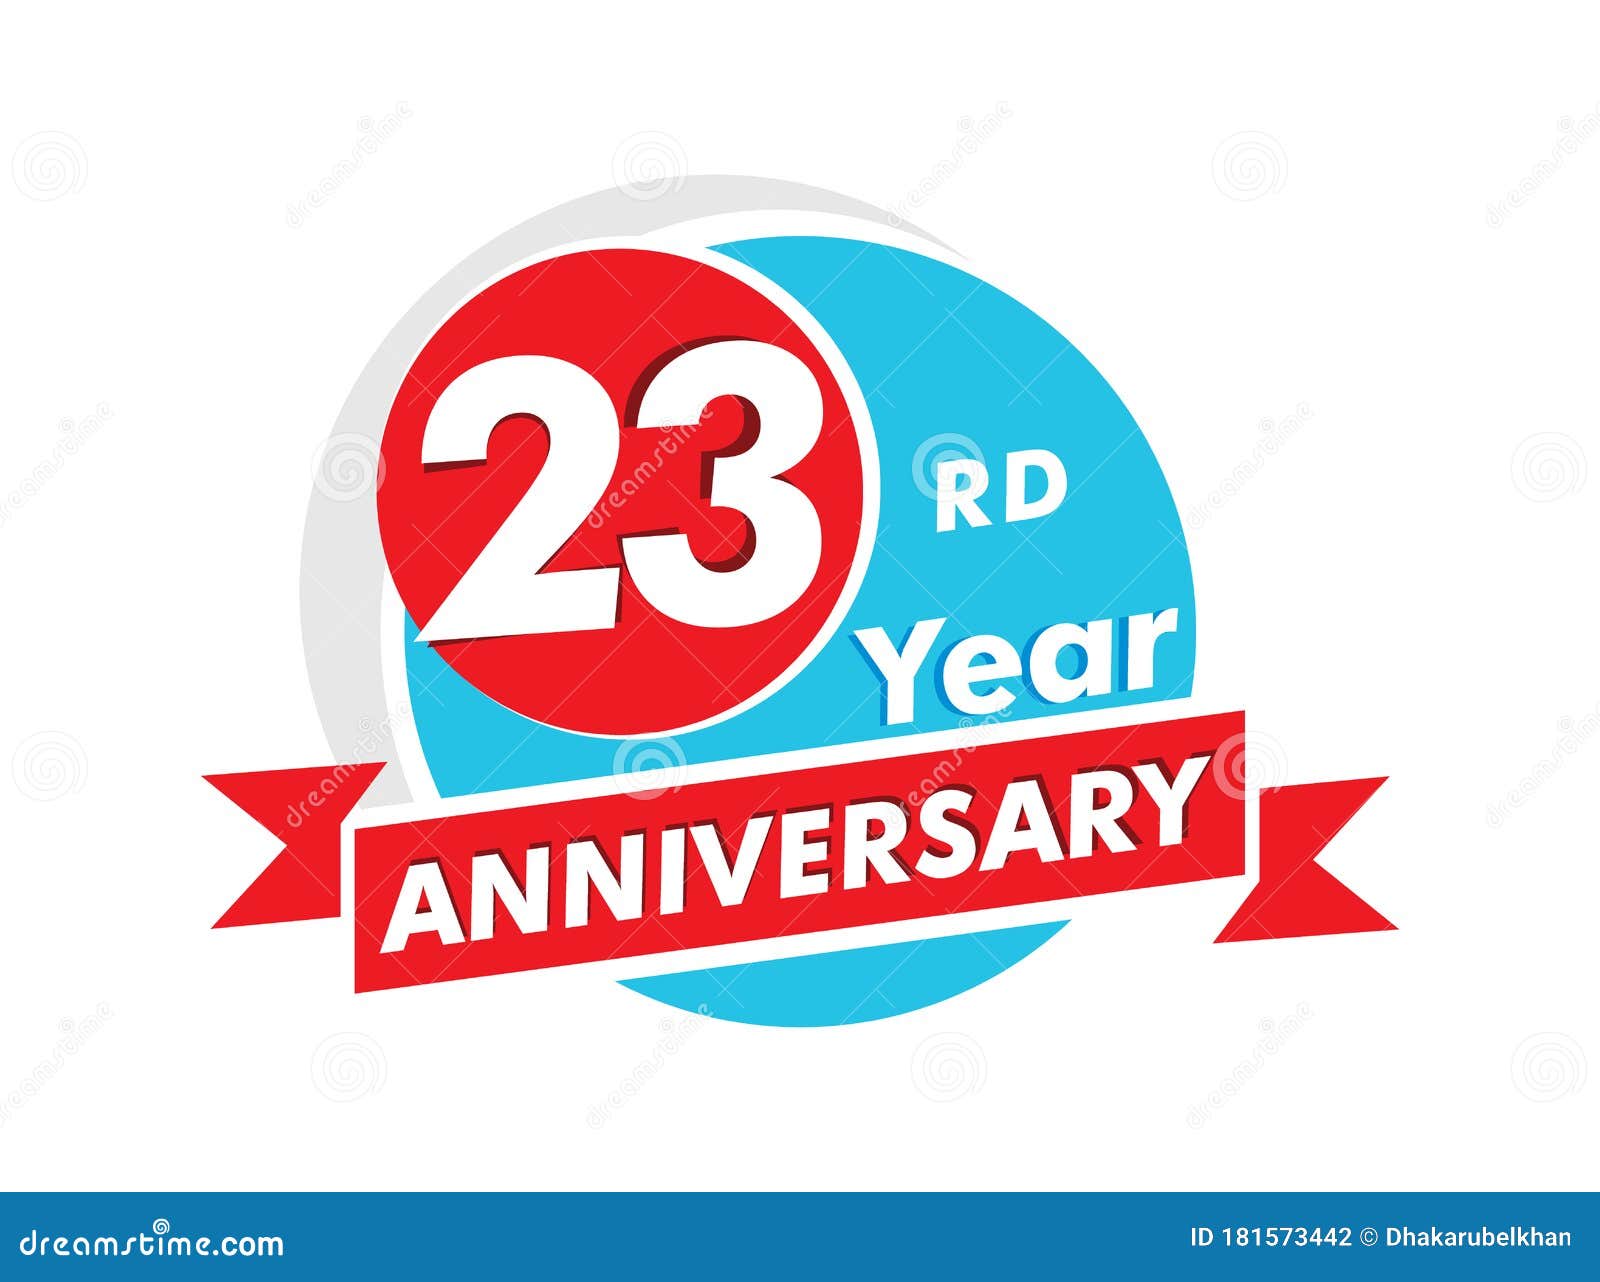 23 Years Anniversary Logotype. Celebration 23rd Anniversary Celebration ...